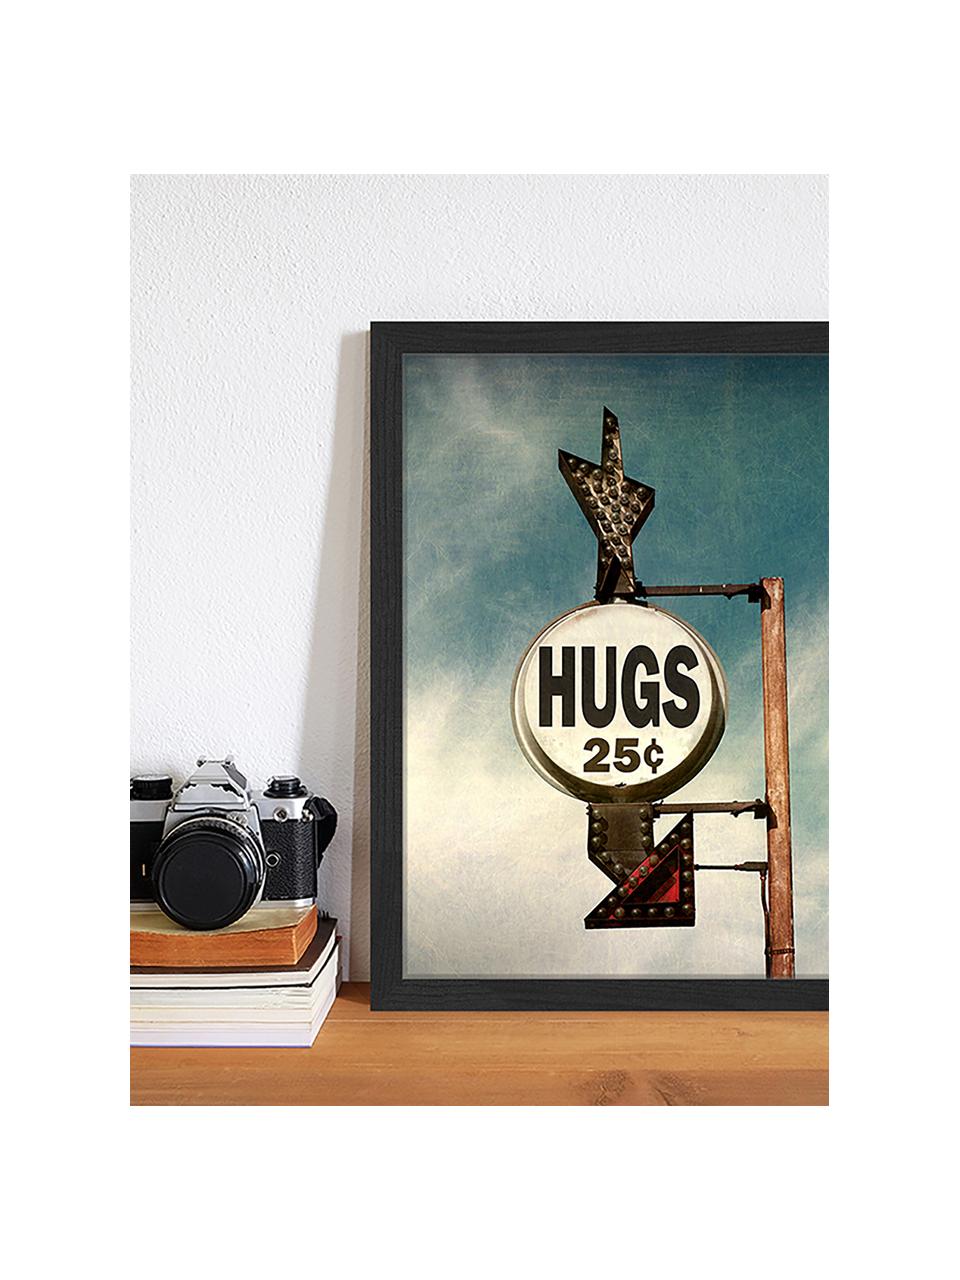 Gerahmter Digitaldruck Hugs For 25C, Bild: Digitaldruck auf Papier, , Rahmen: Holz, lackiert, Front: Plexiglas, Mehrfarbig, B 33 x H 43 cm